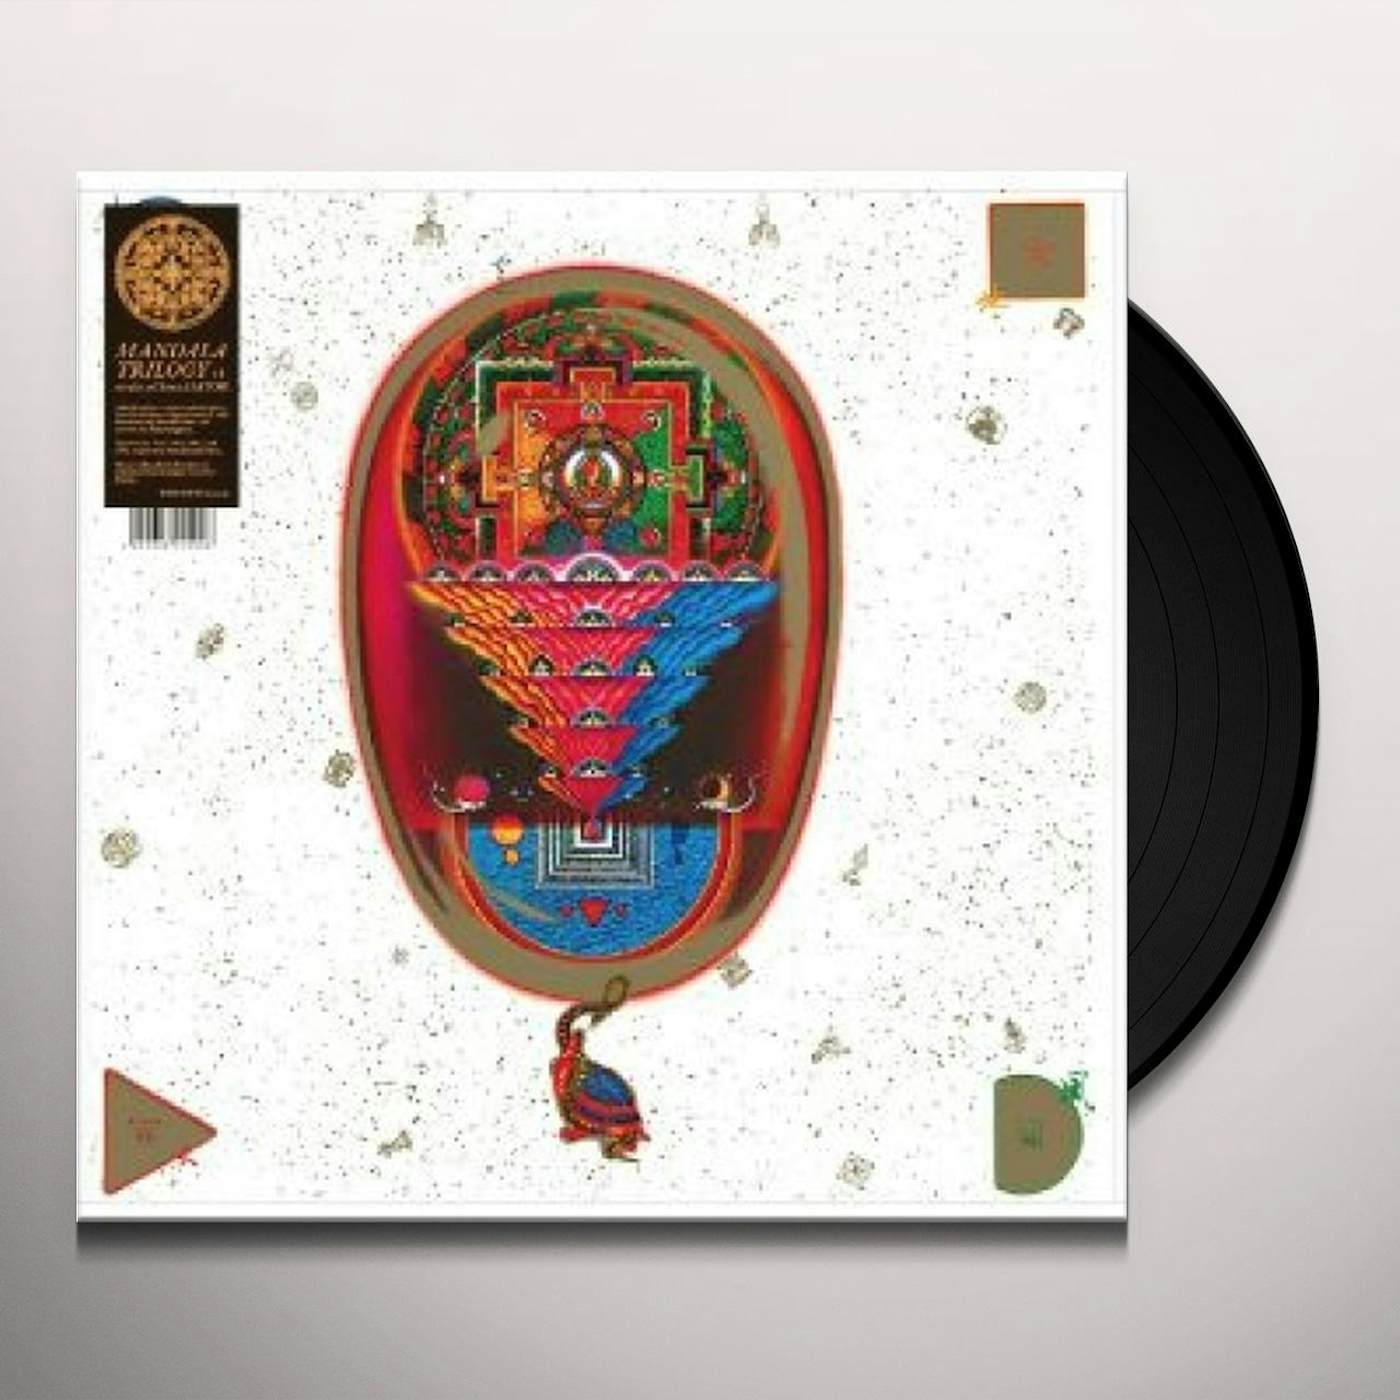 Michio Mamiya: Grave Of The Fireflies Soundtrack Vinyl LP —